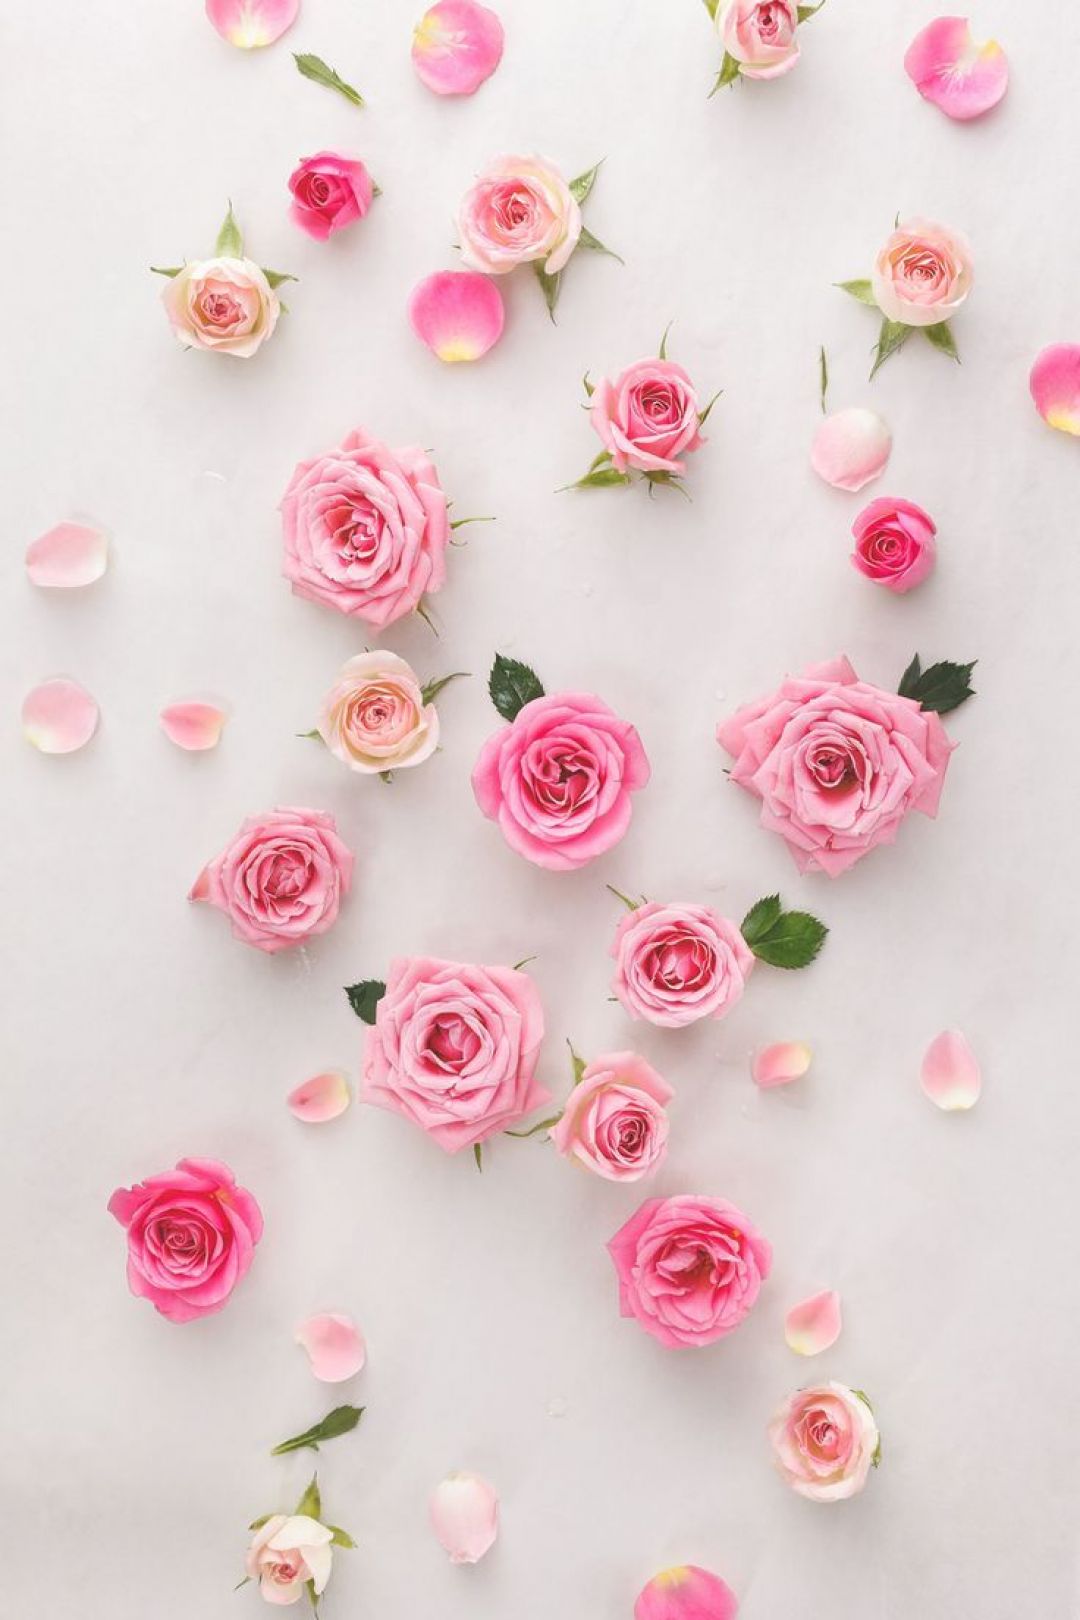 ✓[70+] rose design wallpaper vintage rose wallpaper - Top Background -  Android / iPhone HD Wallpaper Background Download (png / jpg) (2023)